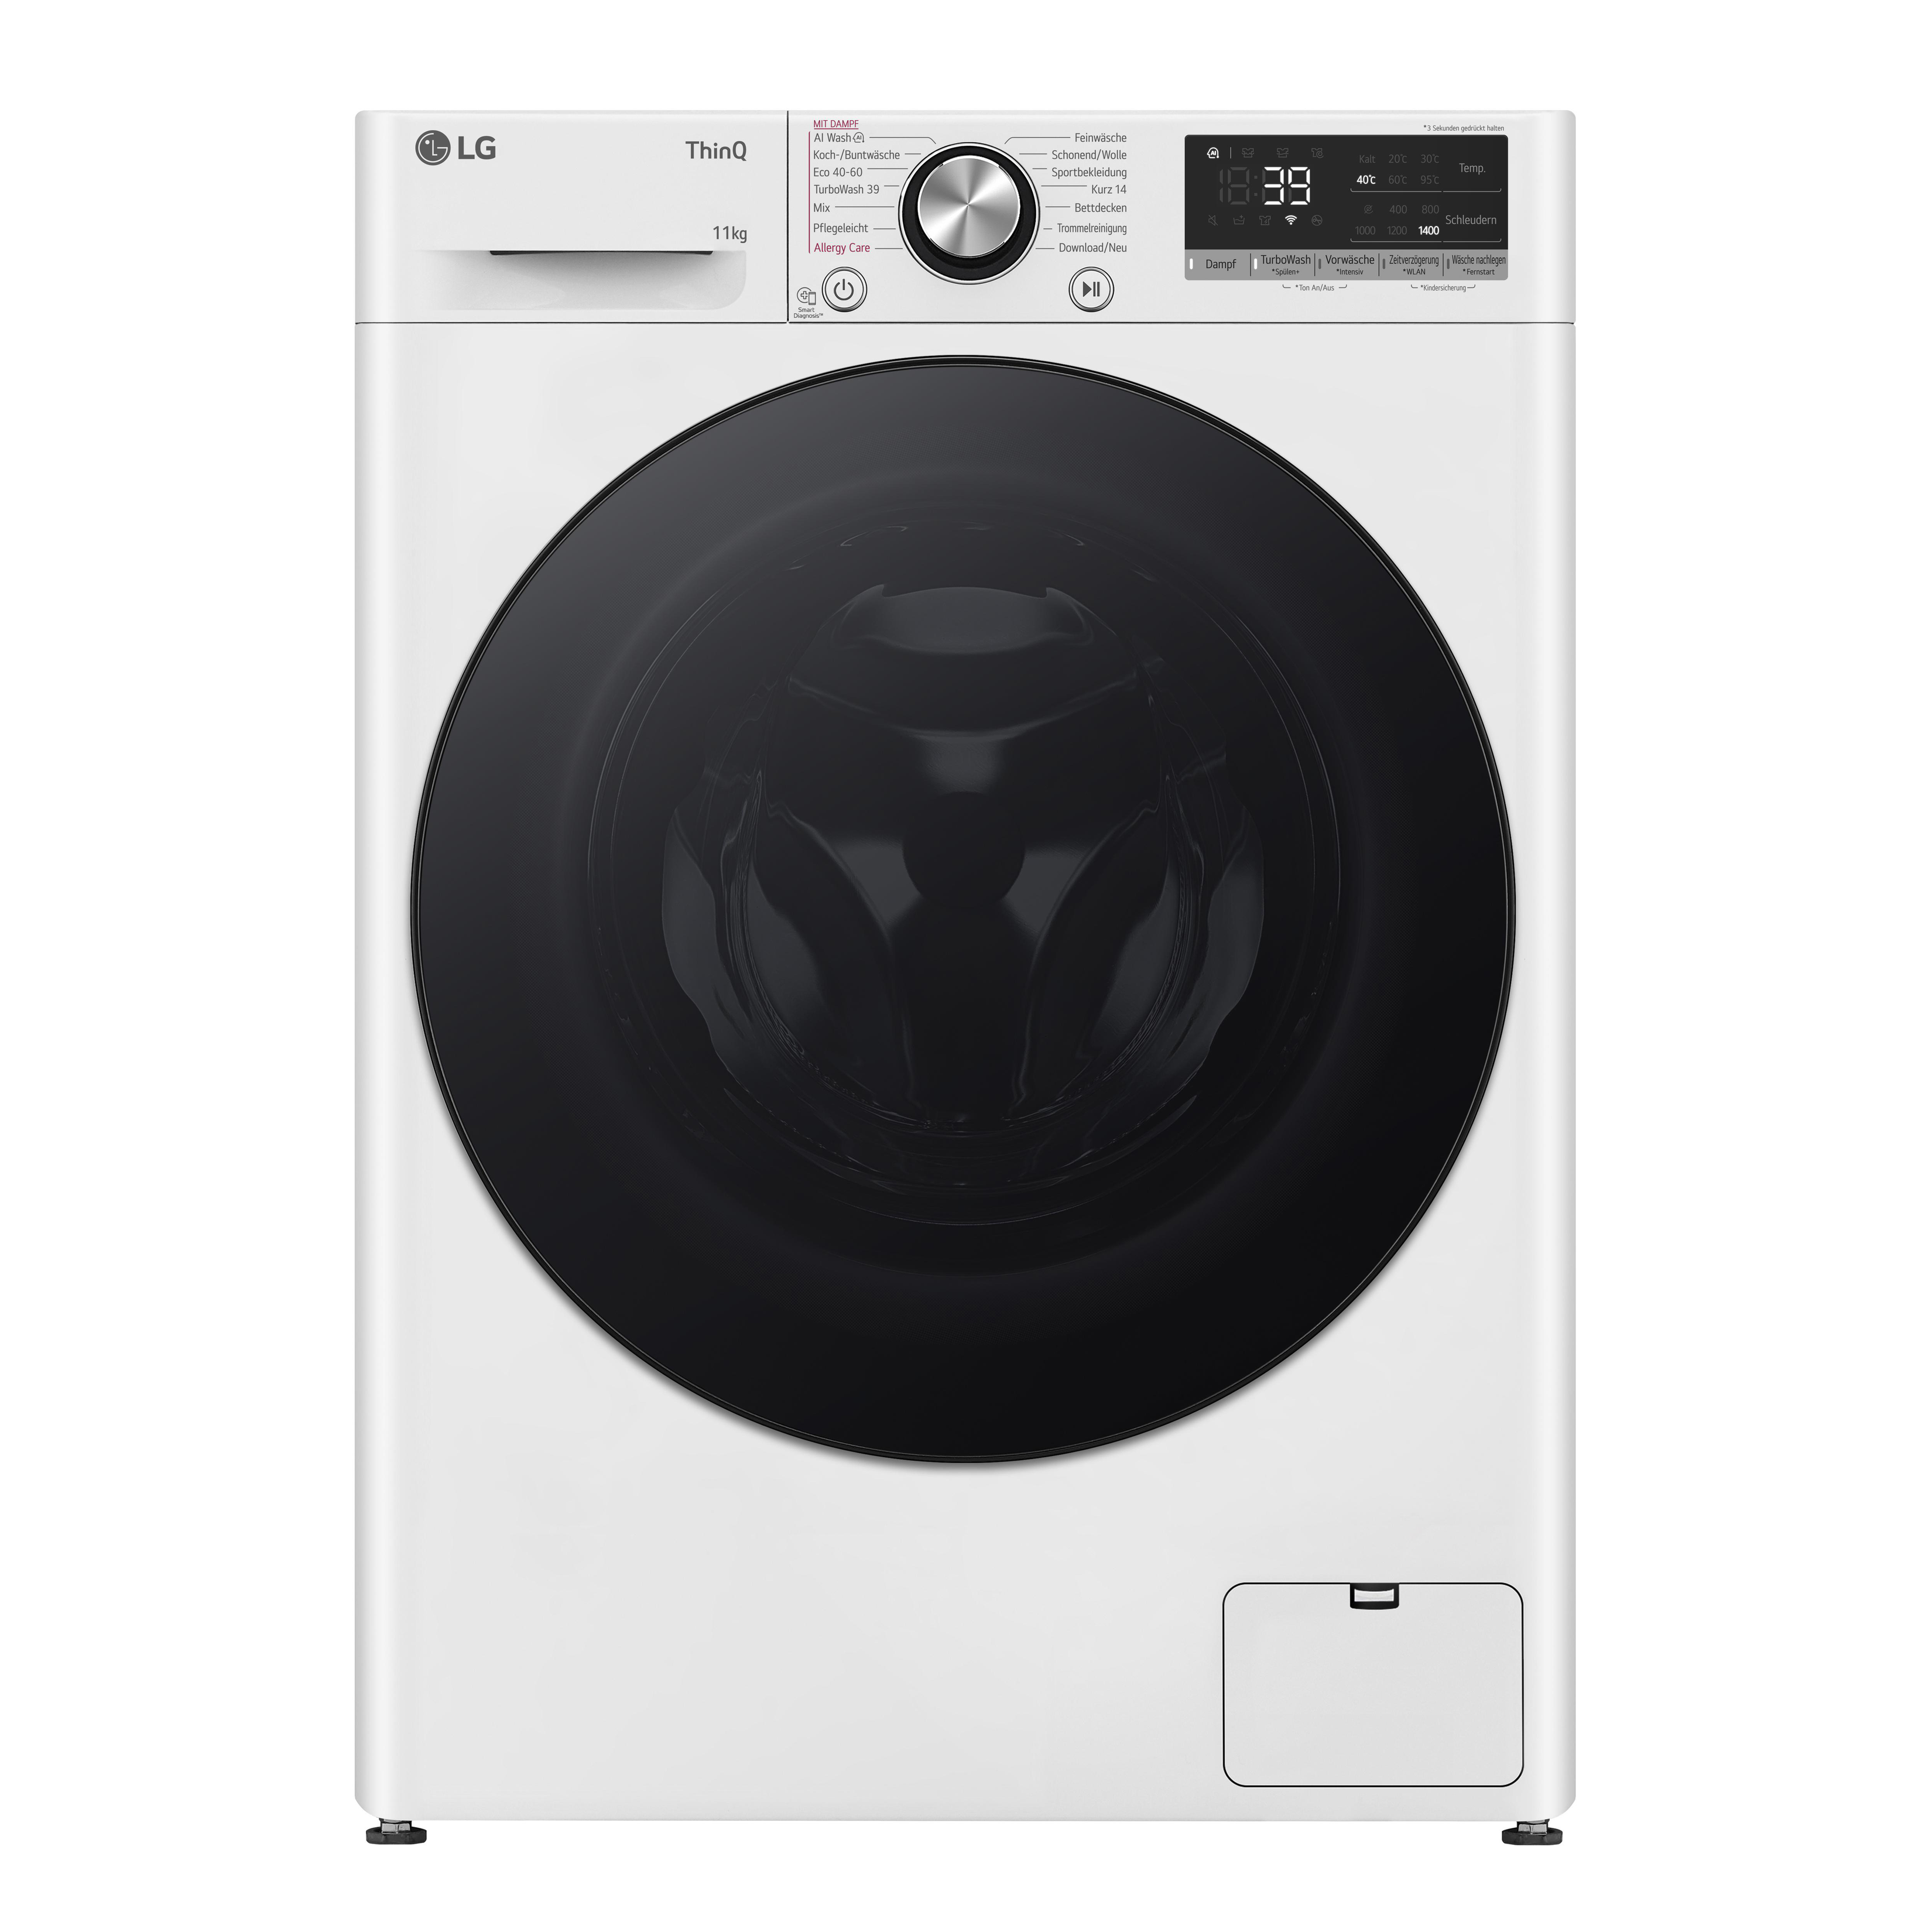 LG F4WR701Y Serie 7 Waschmaschine (11 kg, 1350 U/Min., A) für 599,99€ in Saturn